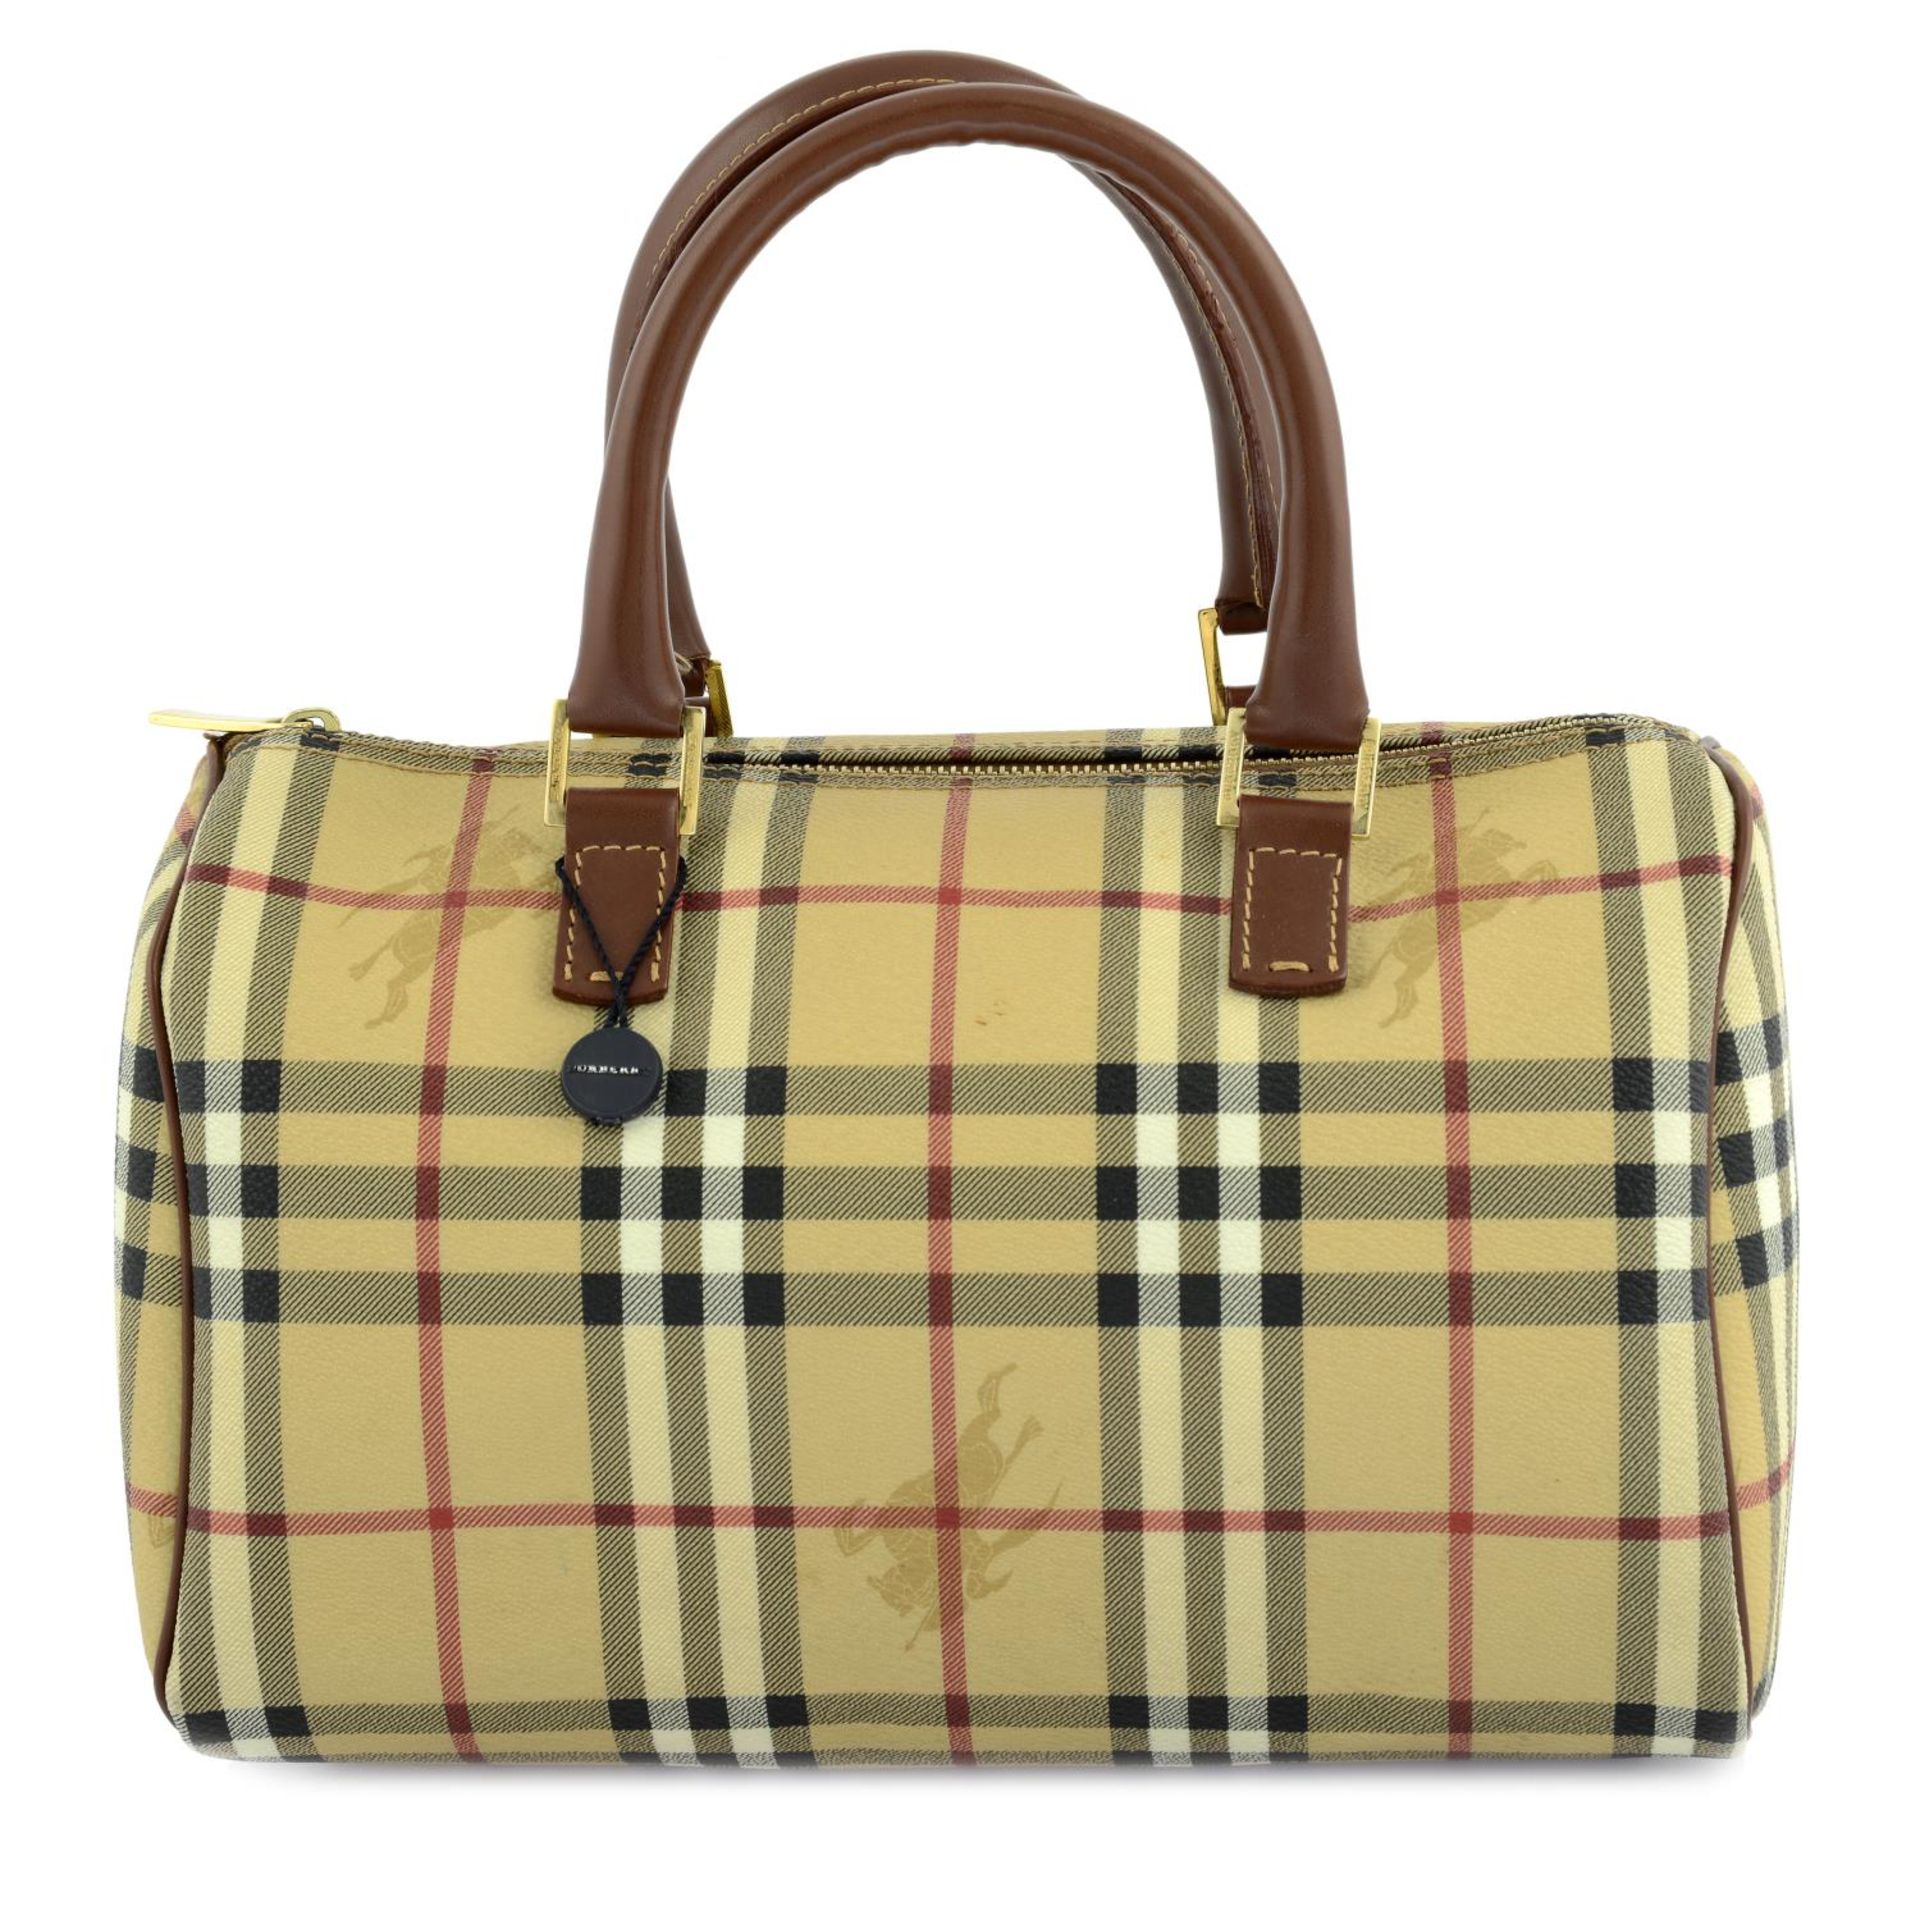 BURBERRY - a Haymarket Check Boston handbag.